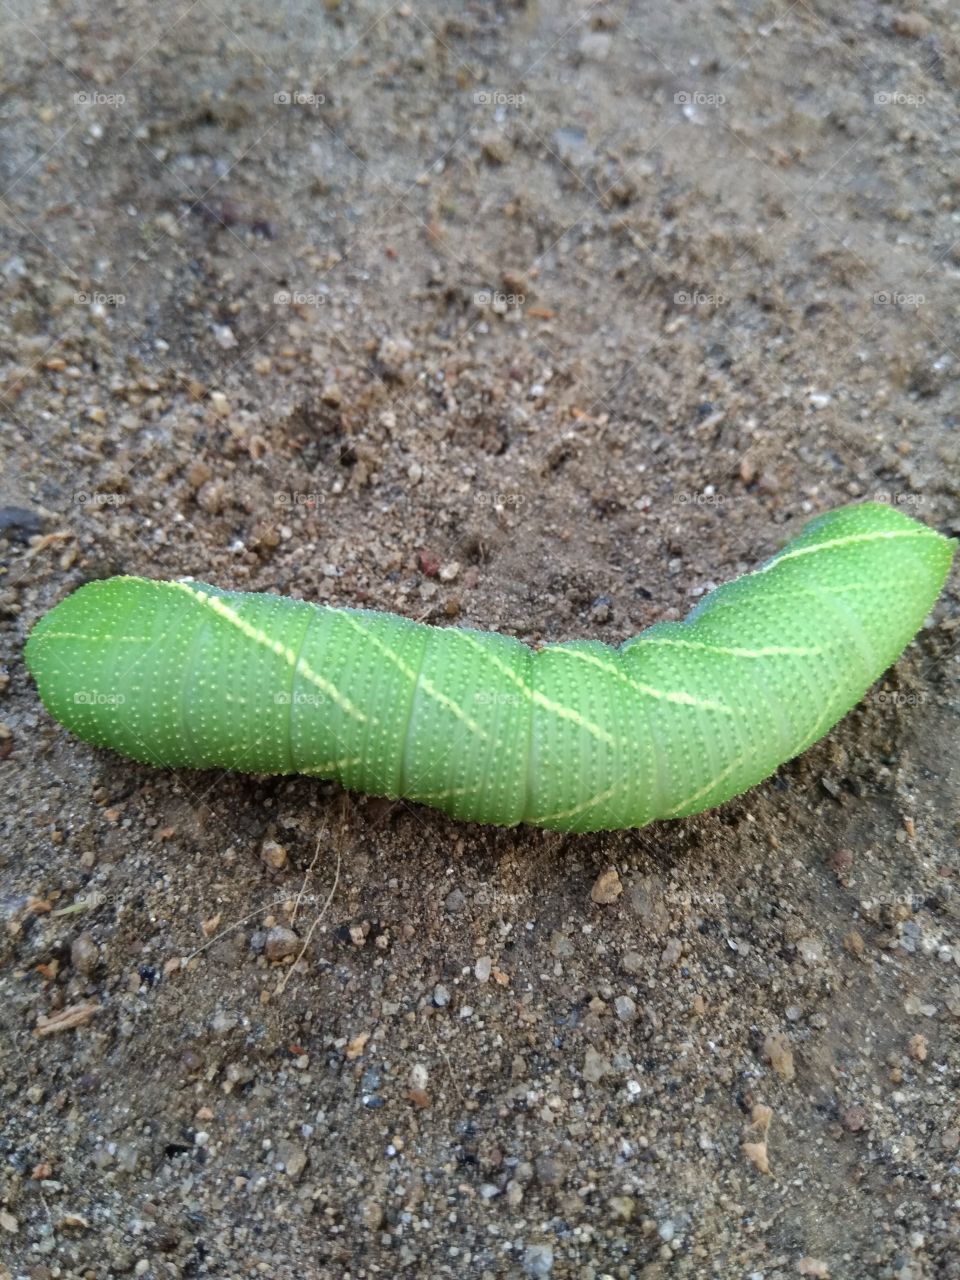 greenworm